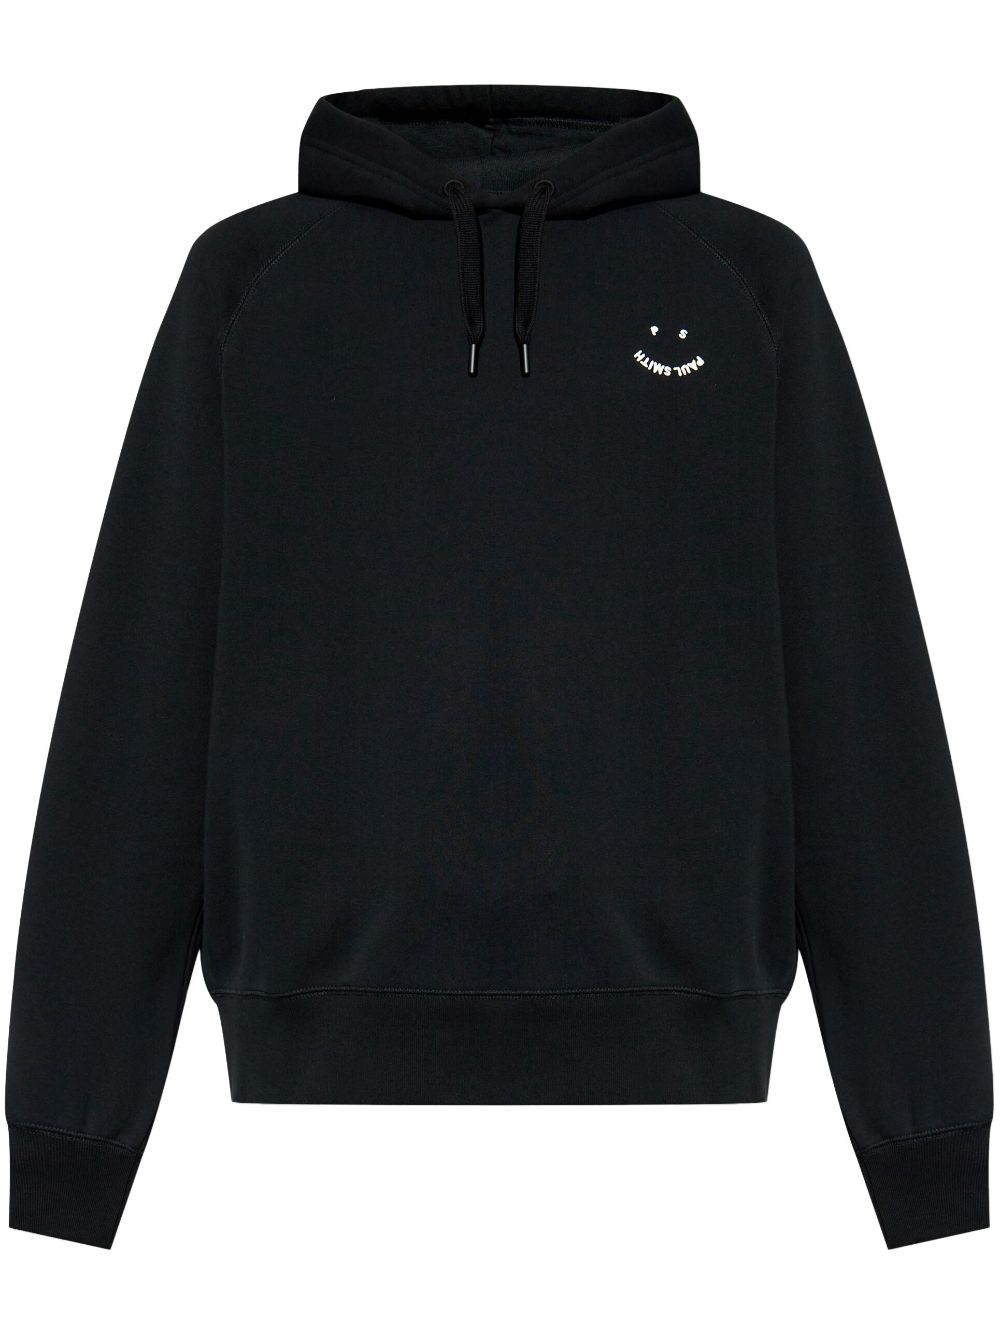 PS Paul Smith Happy hoodie - Black von PS Paul Smith